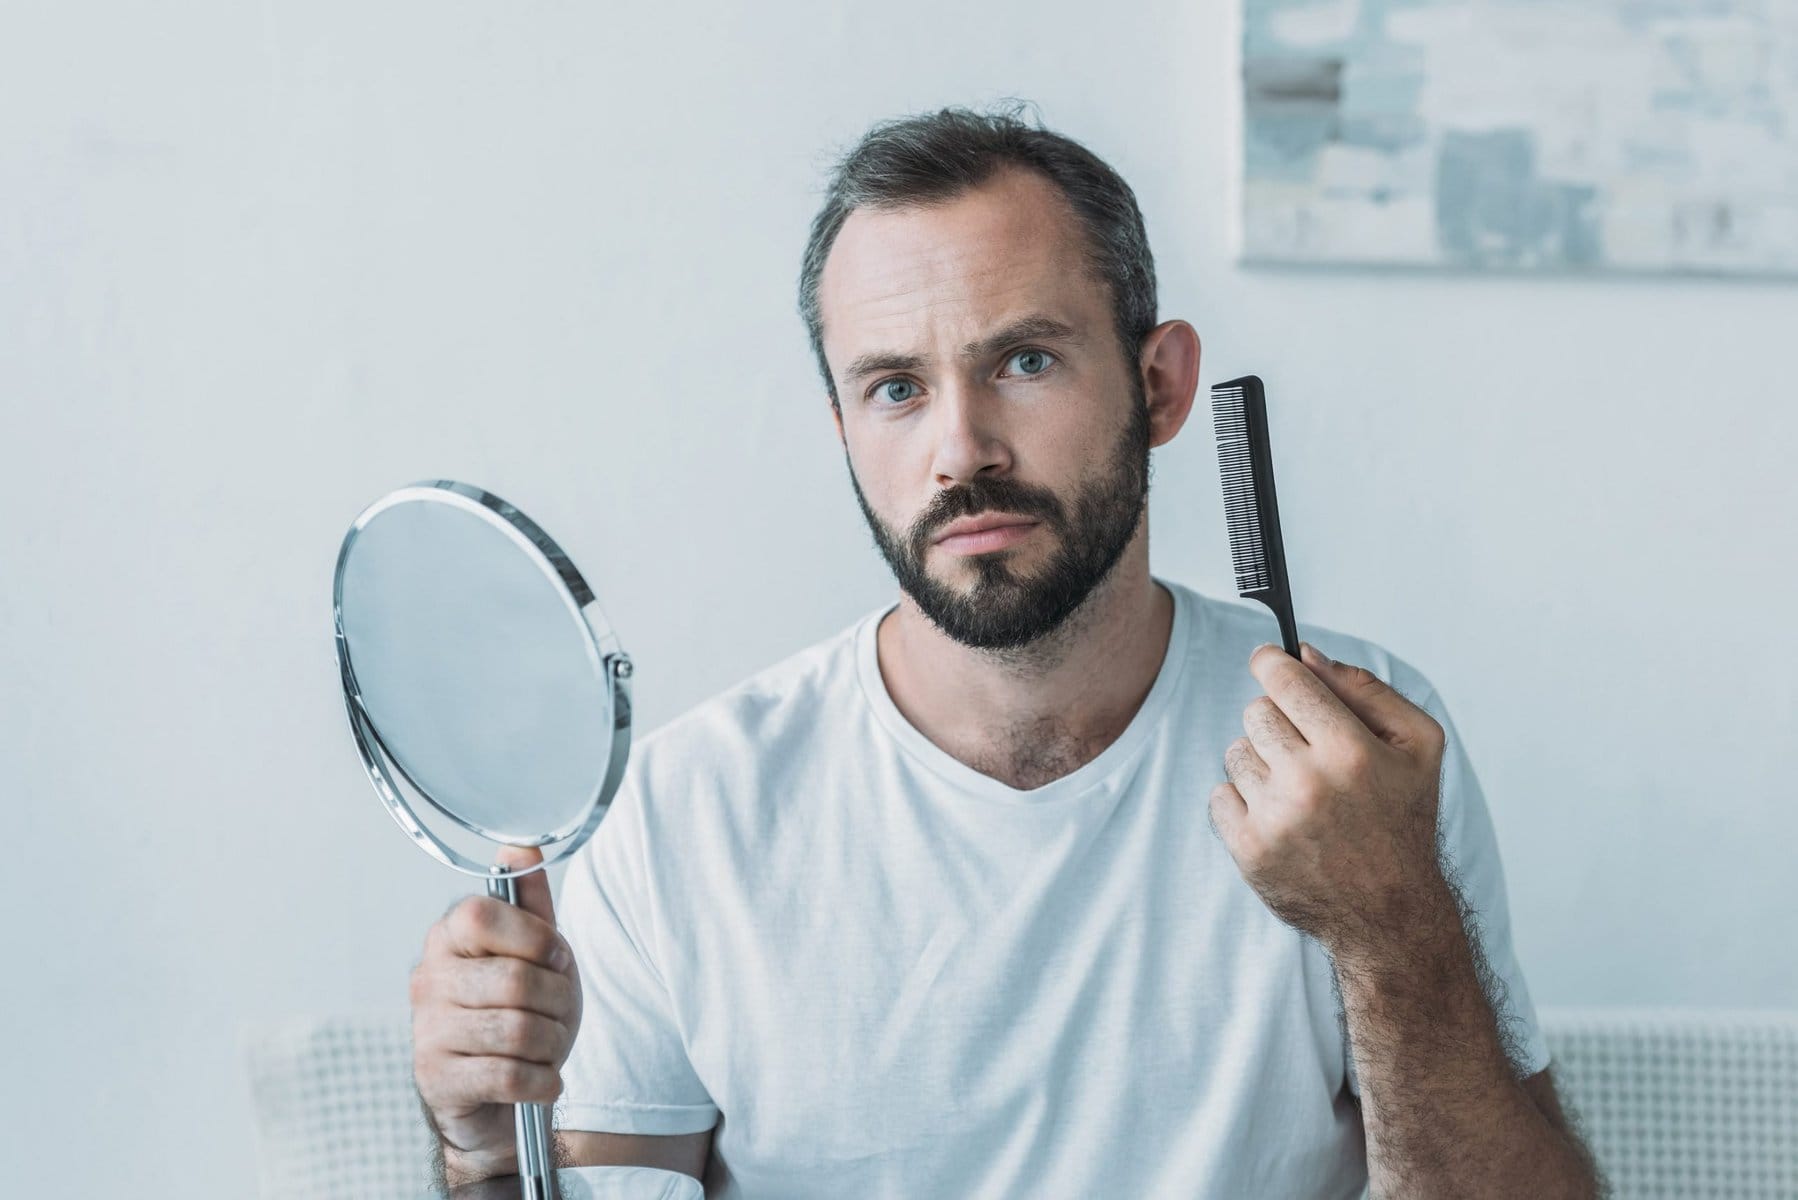 Top 5 Hair Loss Treatments for Men